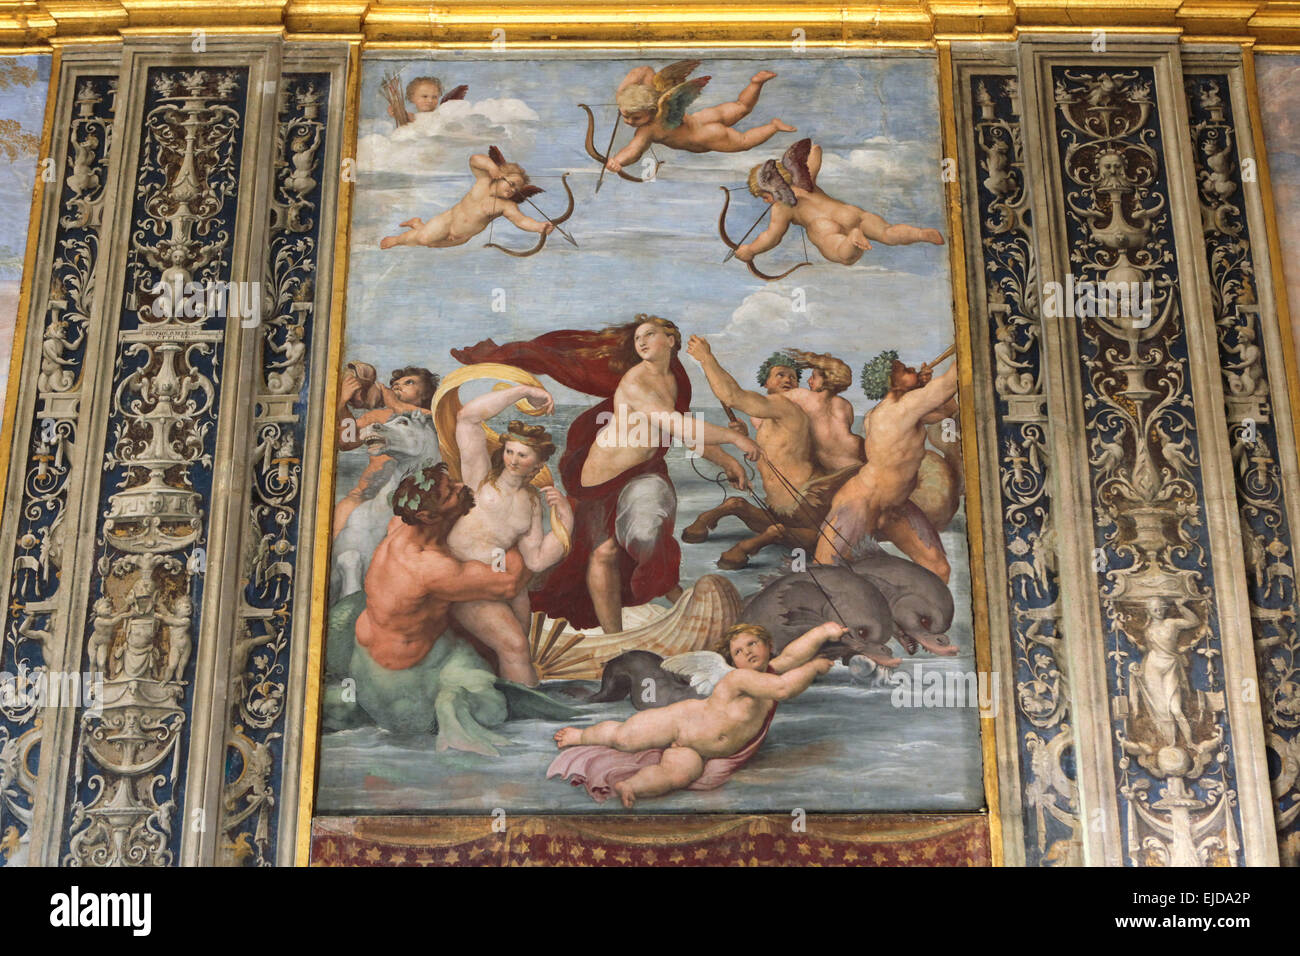 Triumph of Galatea. Fresco by Raphael at the Loggia of Galatea in the Villa Farnesina in Rome, Italy. Stock Photo